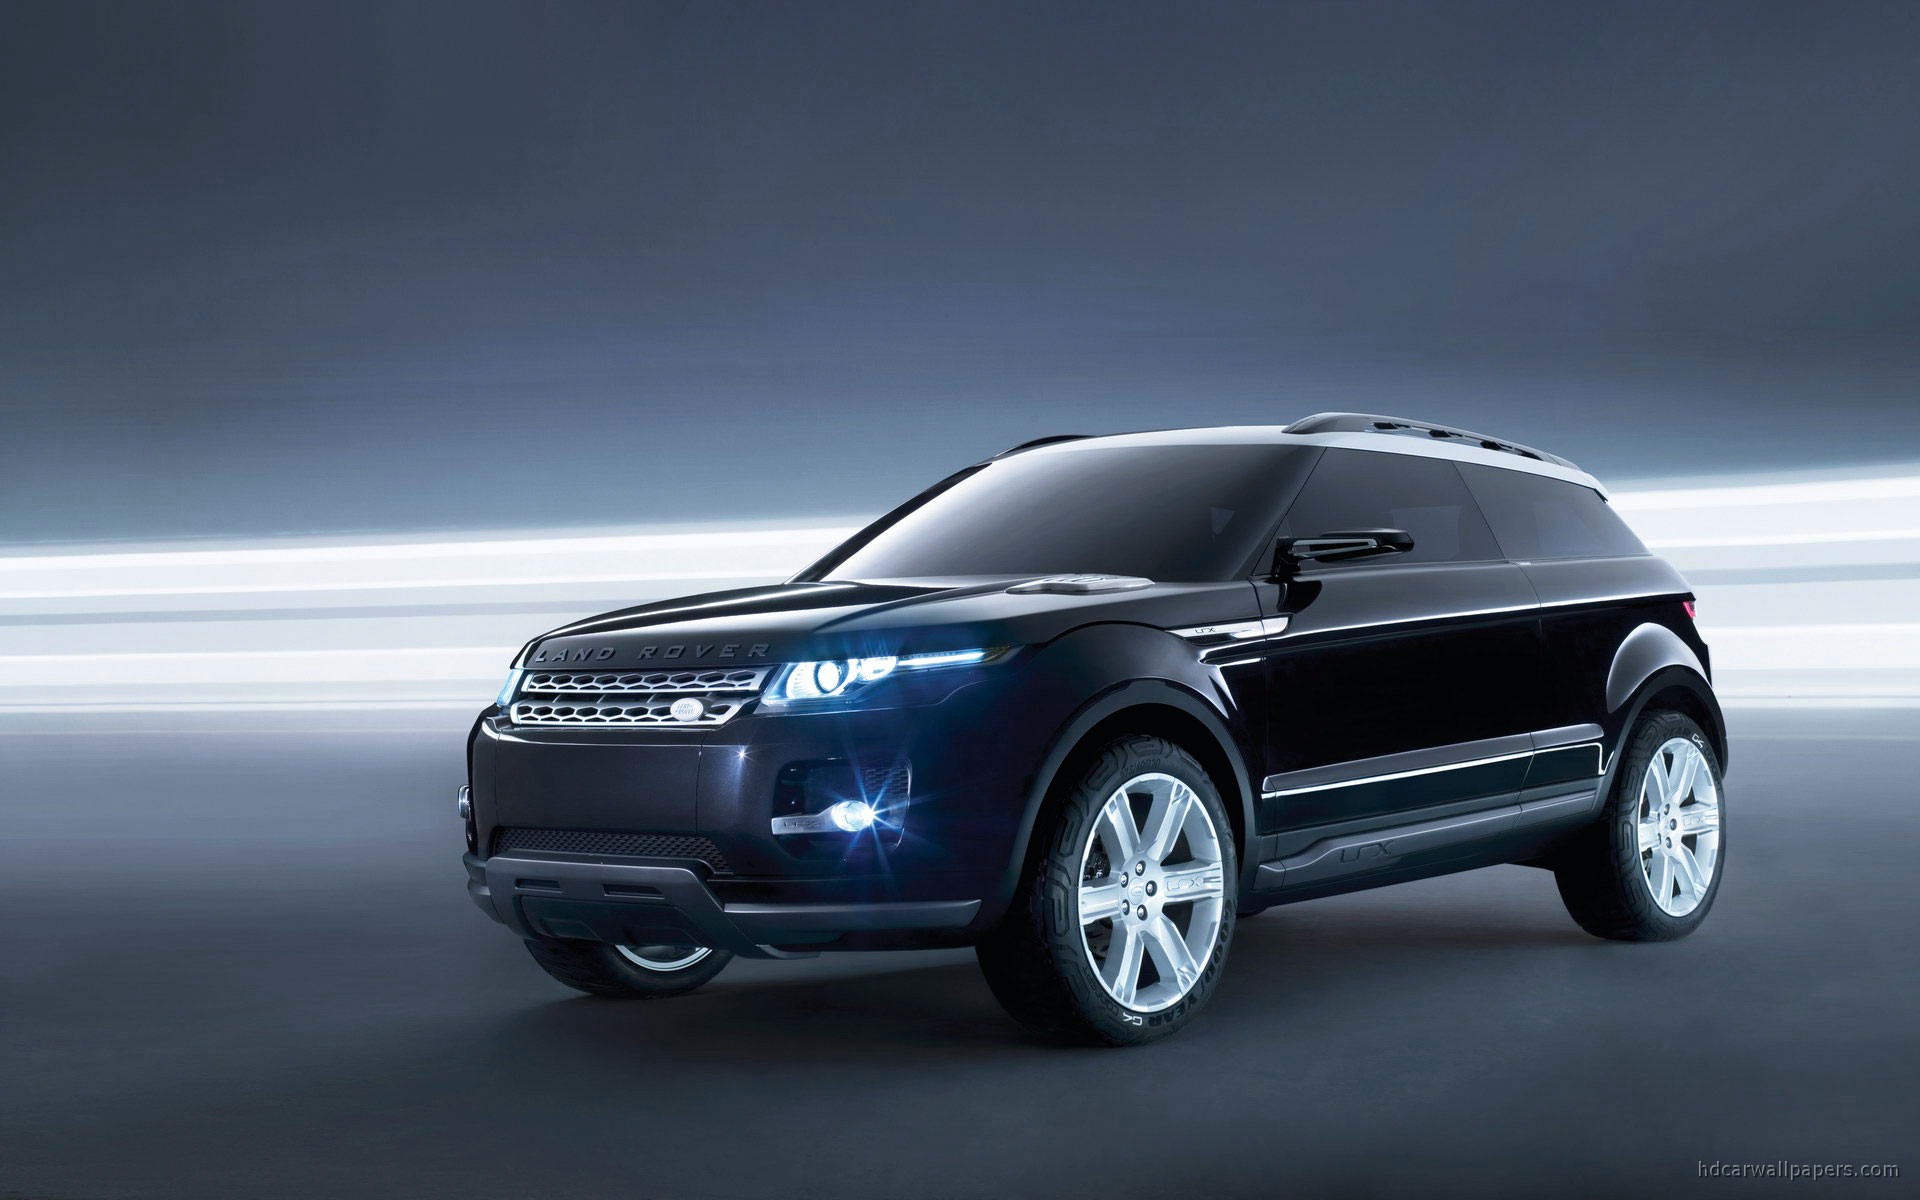 Range Rover Evoque Black HD Wallpaper Background Image